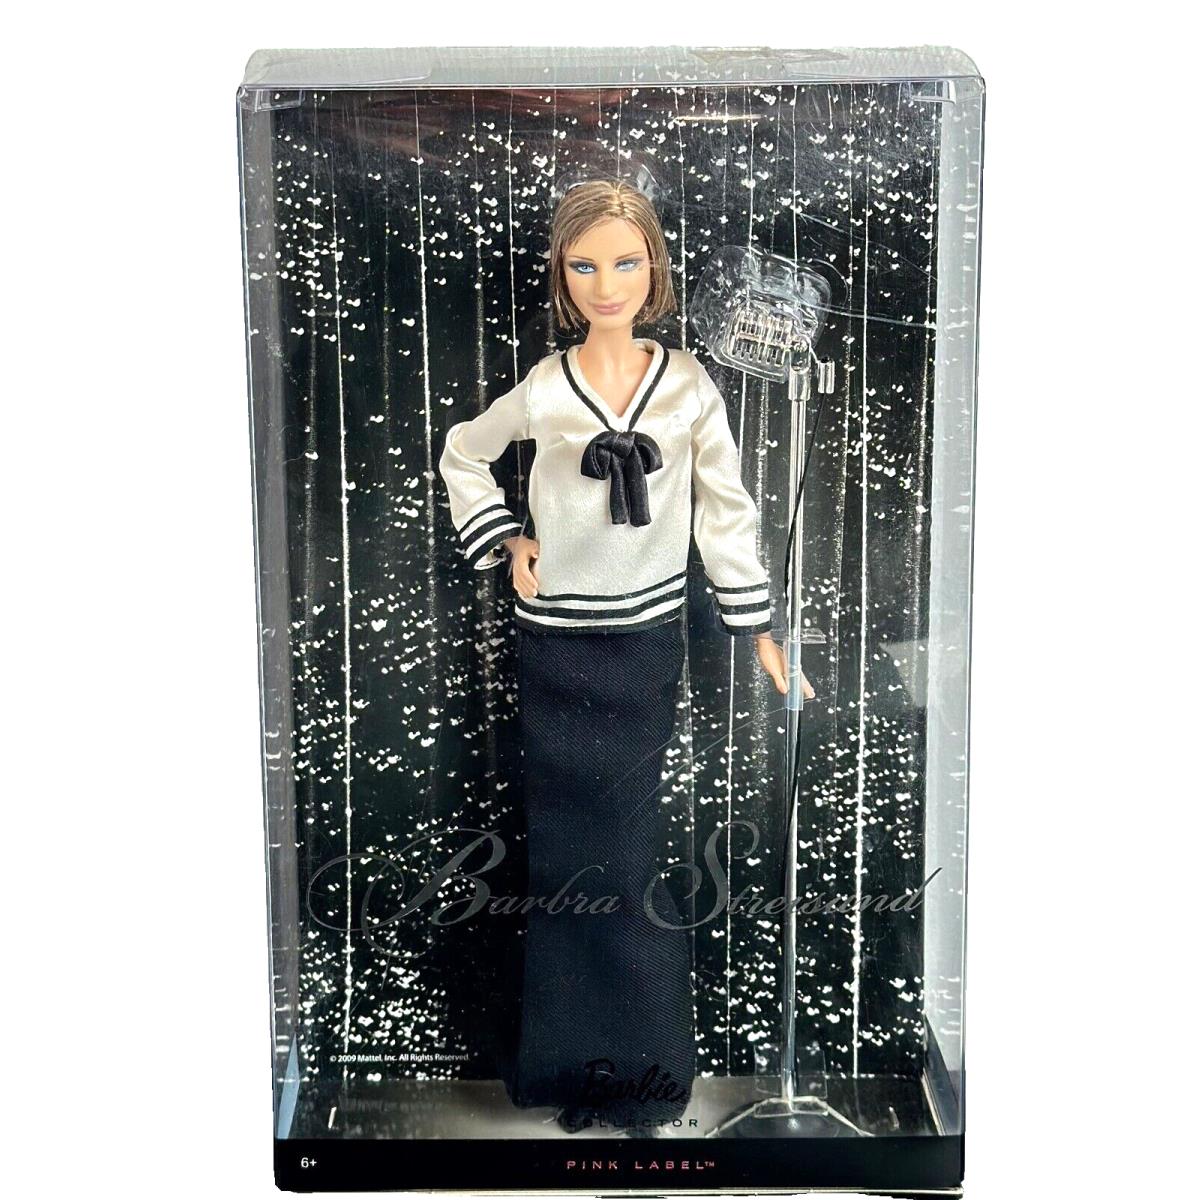 Barbra Streisand Barbie Collector Pink Label Doll 2009 N6574